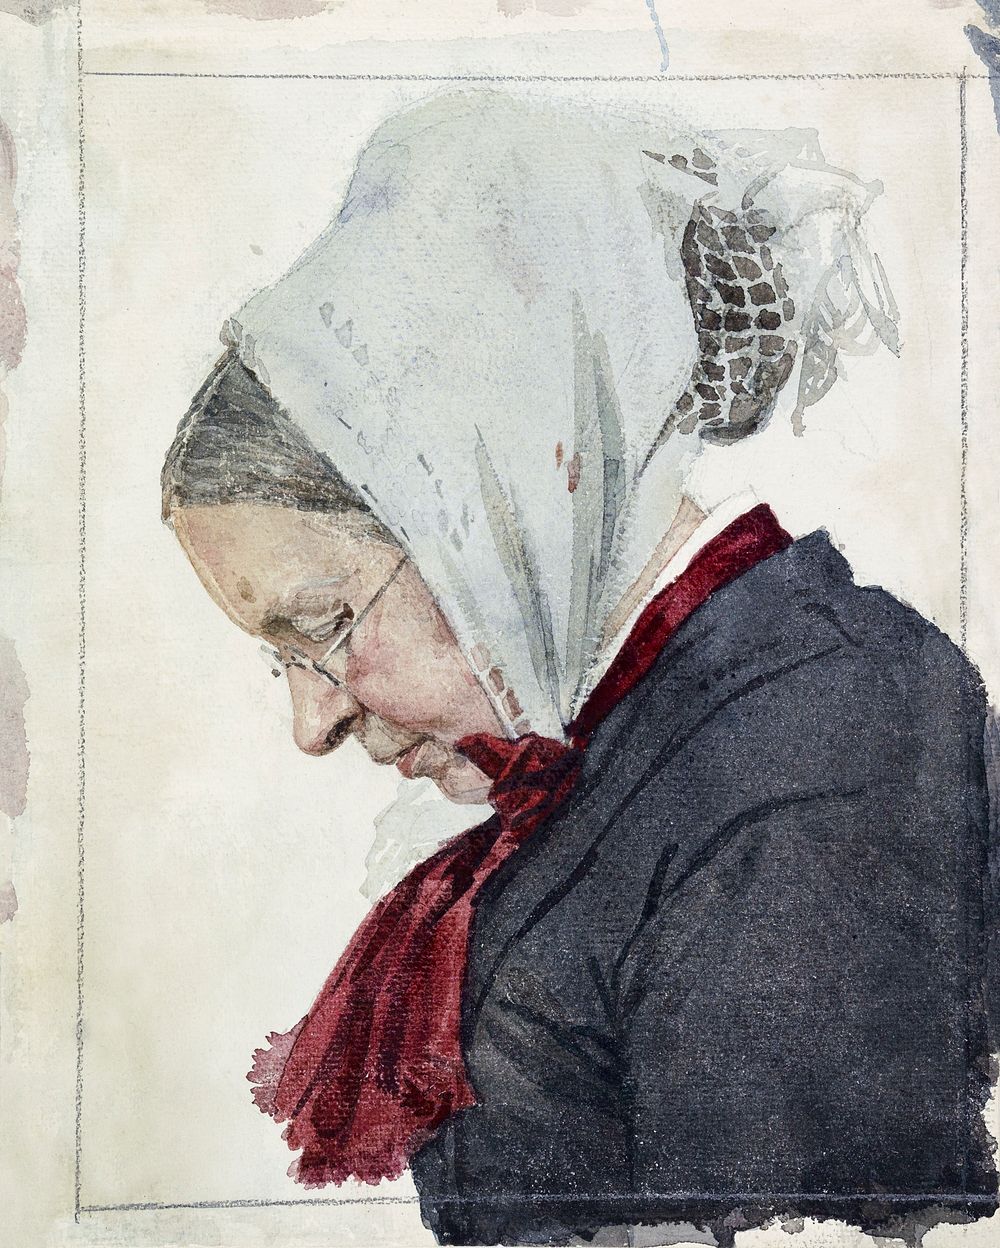 Oude vrouw met hoofddoek en rode sjaal (ca. 1874&ndash;1925) by Jan Veth. Original from The Rijksmuseum. Digitally enhanced…